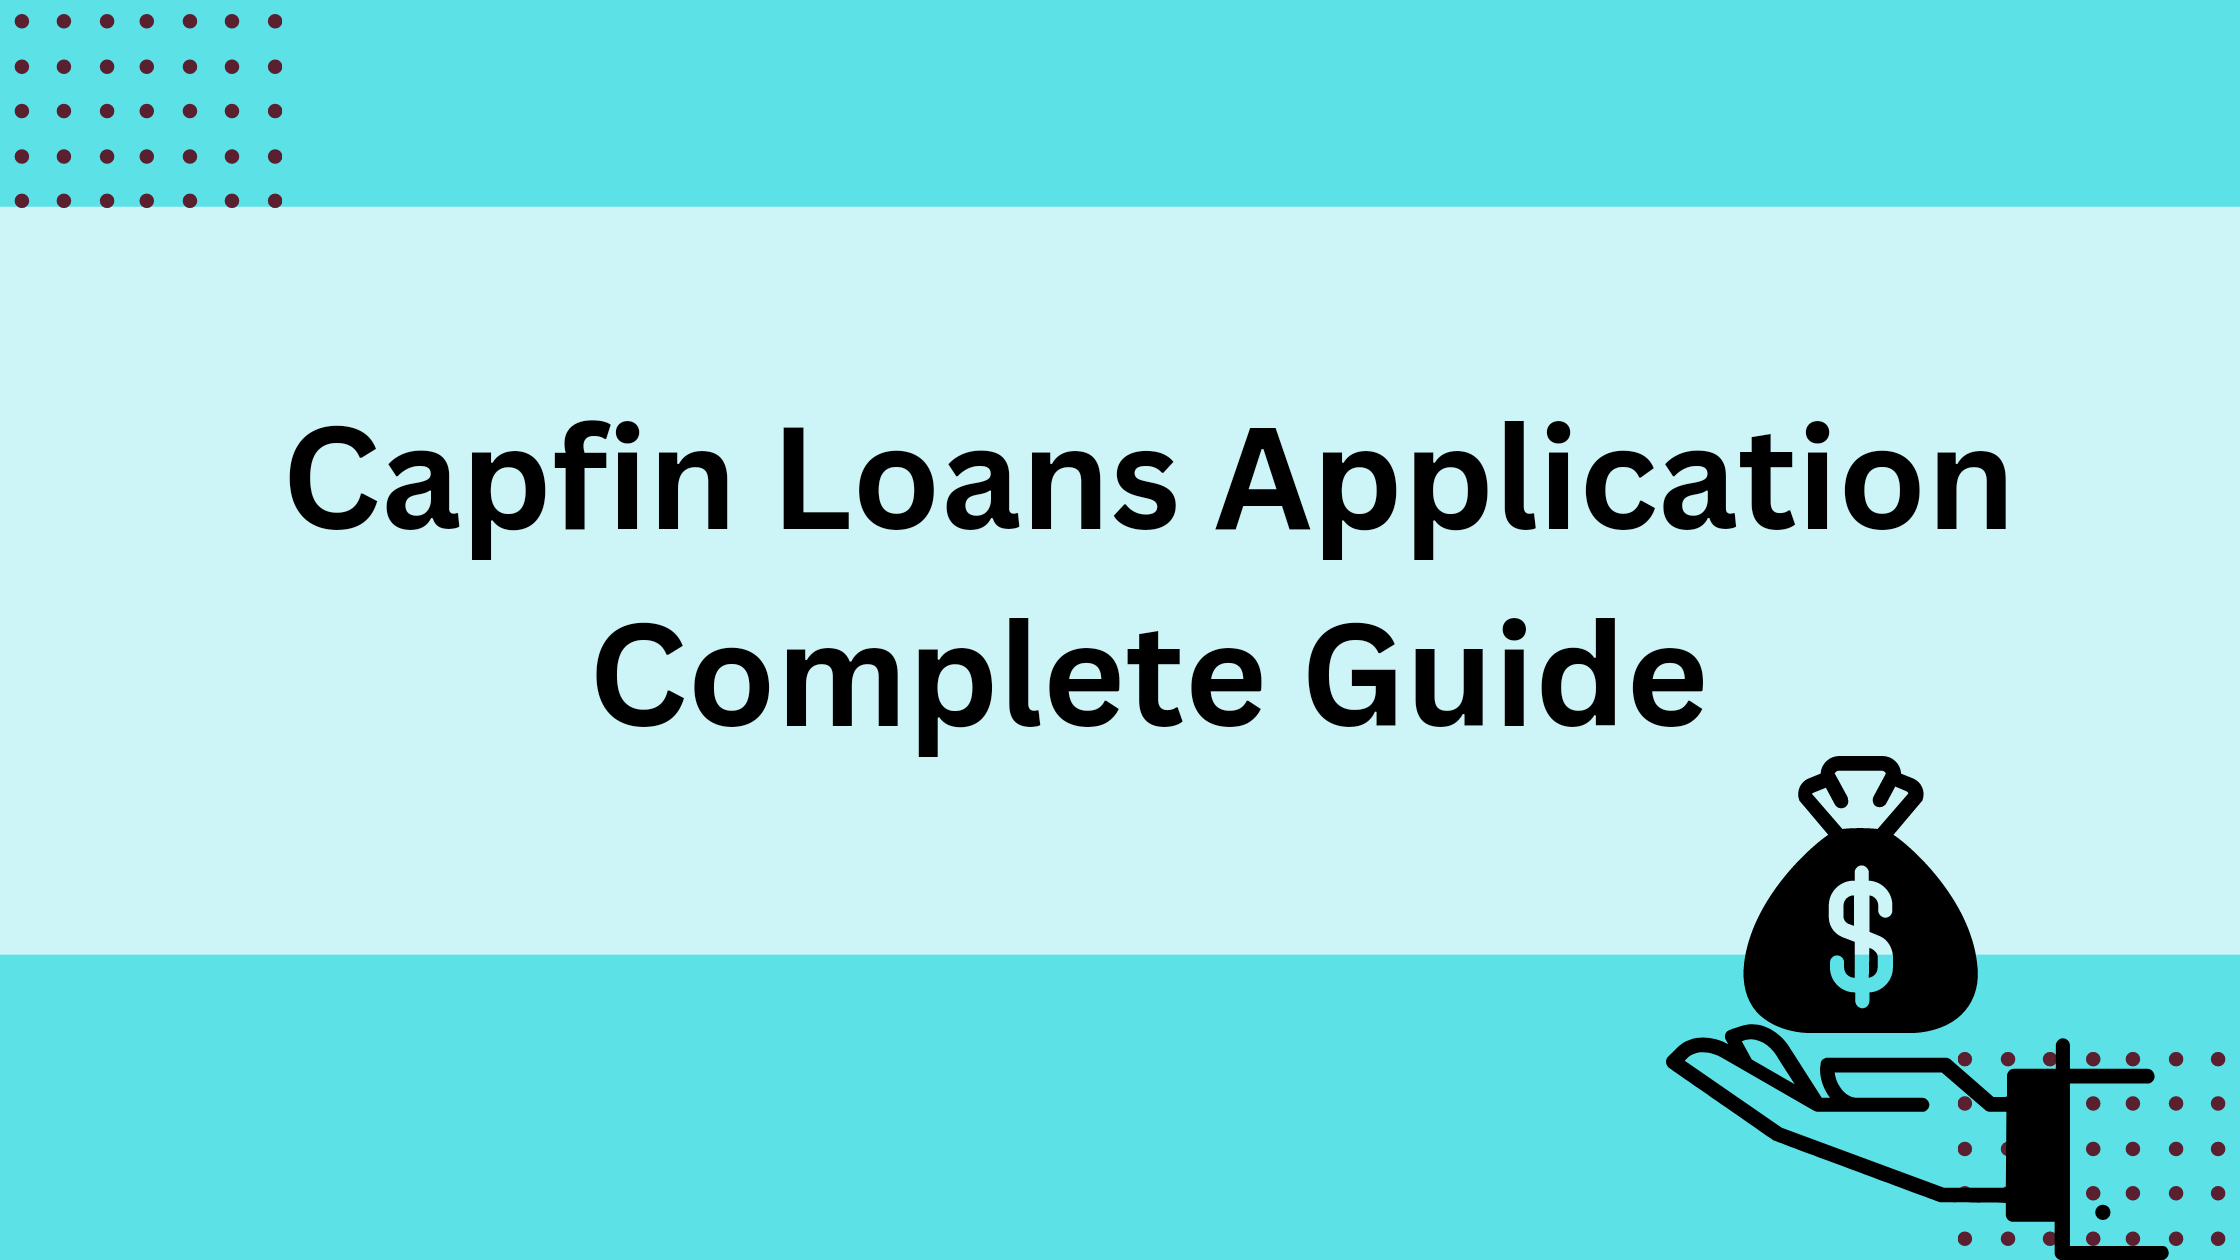 Capfin Loans Application Complete Guide